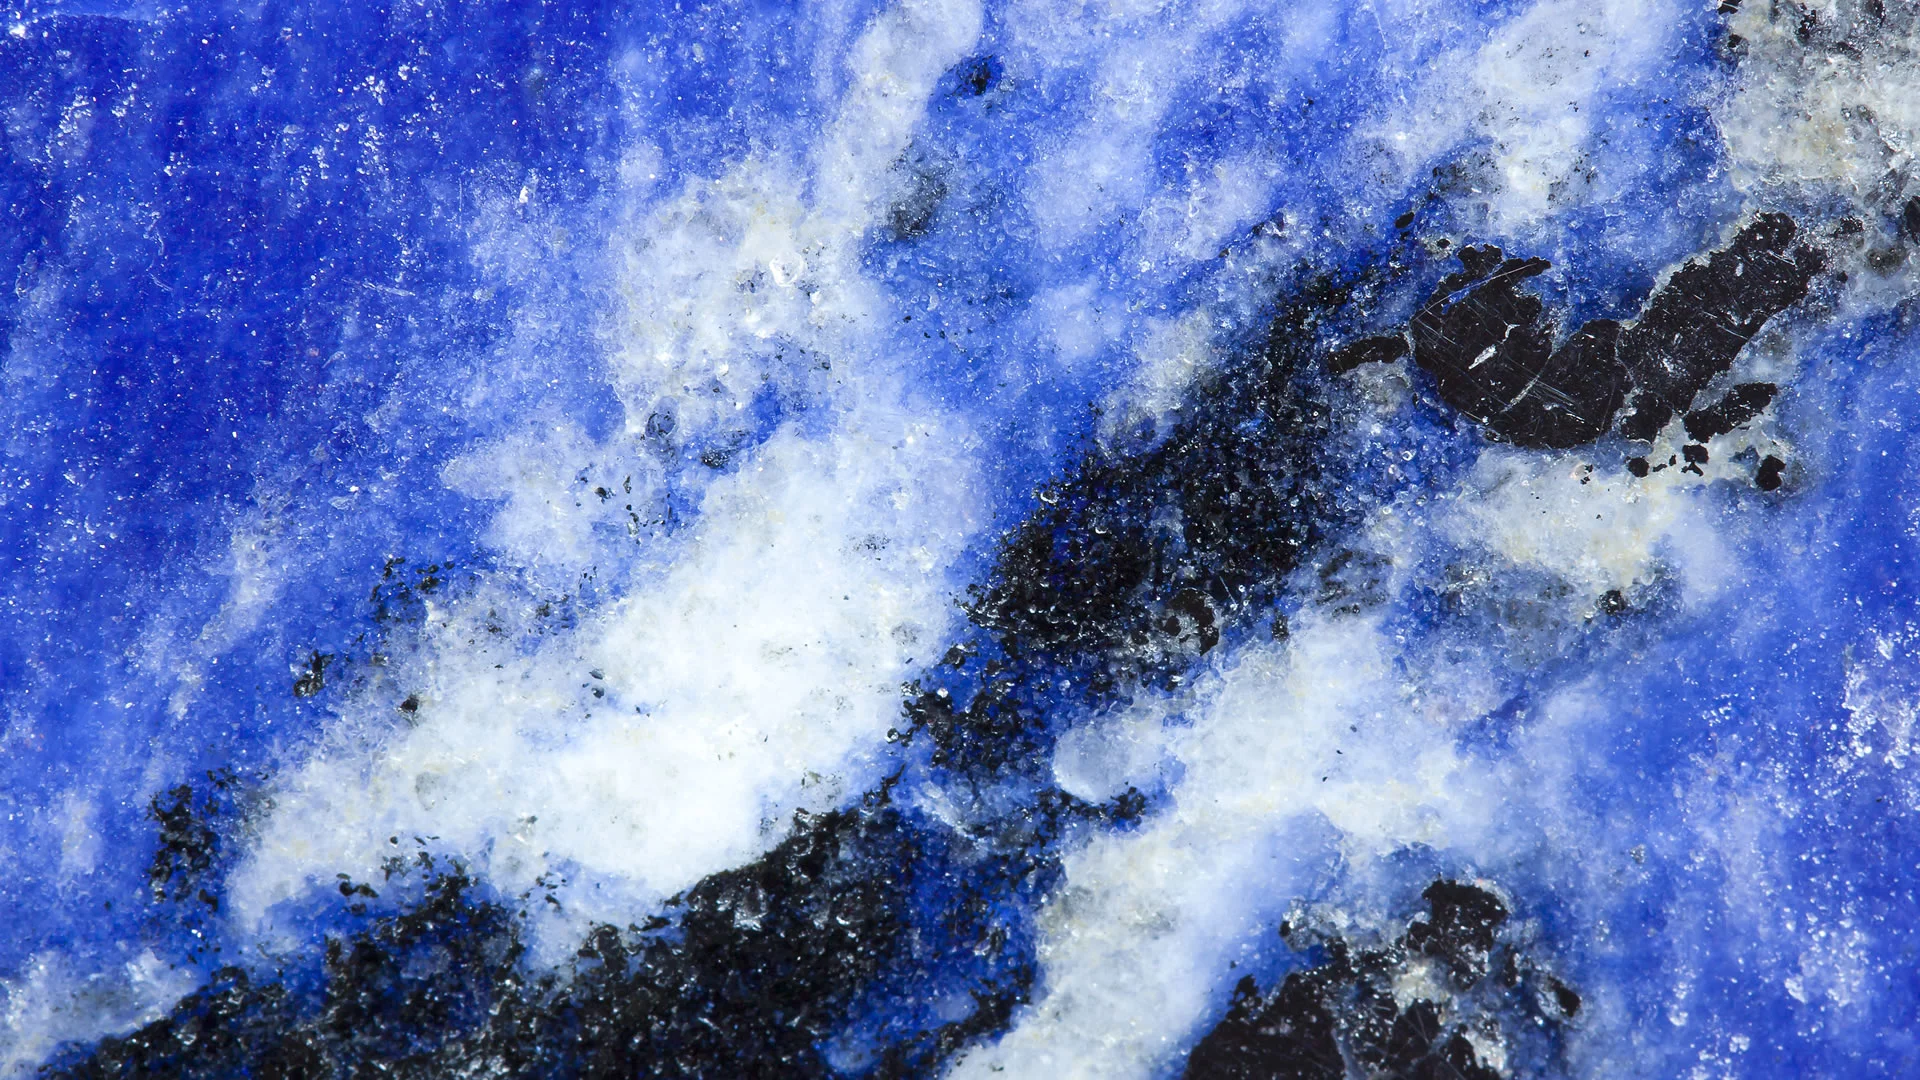 Close up view of a specimen of lapis lazuli